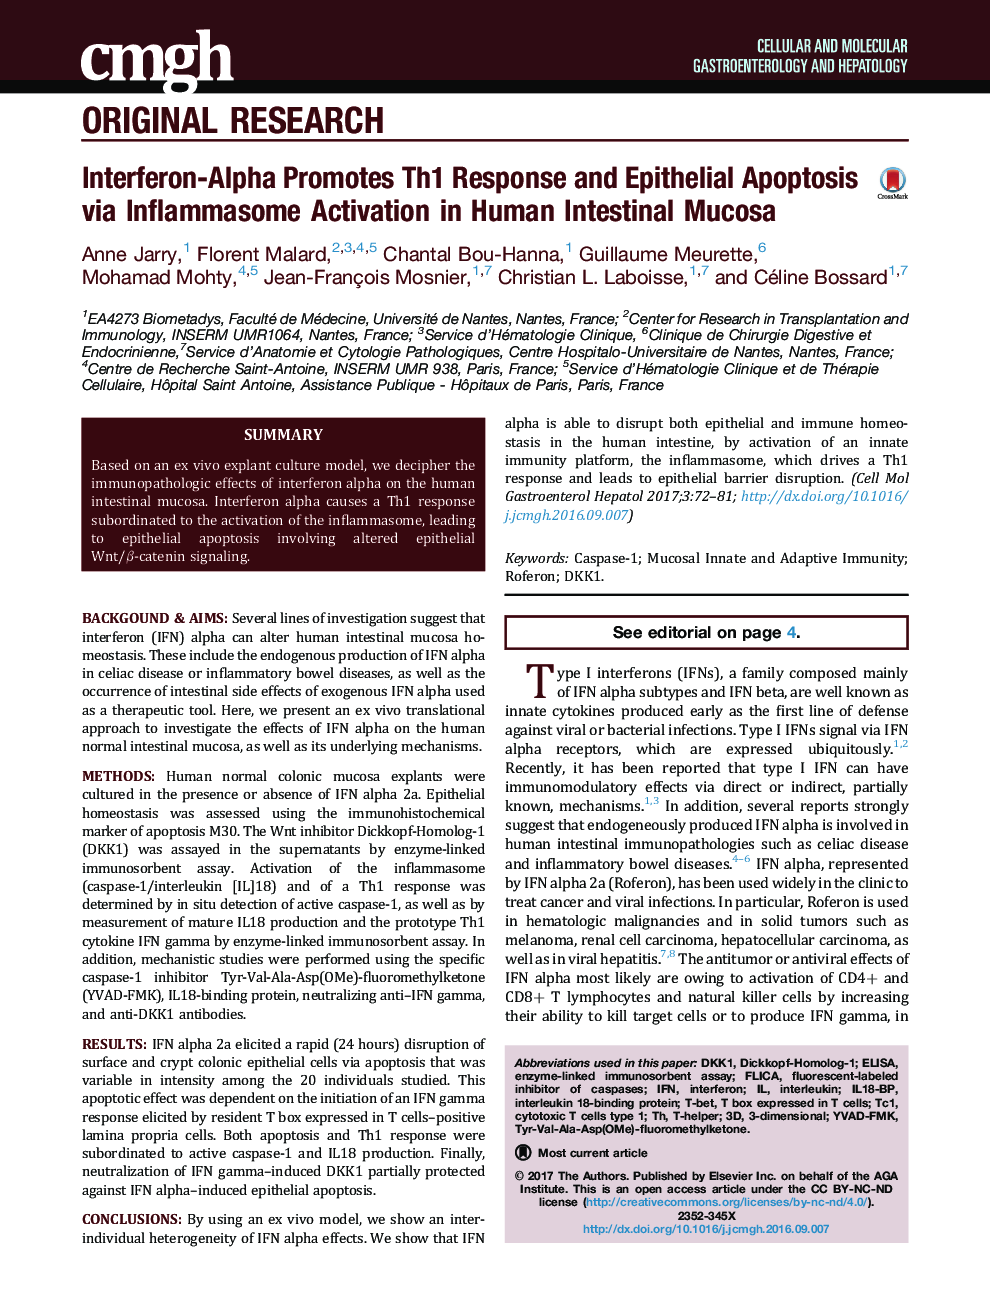 Interferon-Alpha Promotes Th1 Response and Epithelial Apoptosis via Inflammasome Activation in Human Intestinal Mucosa